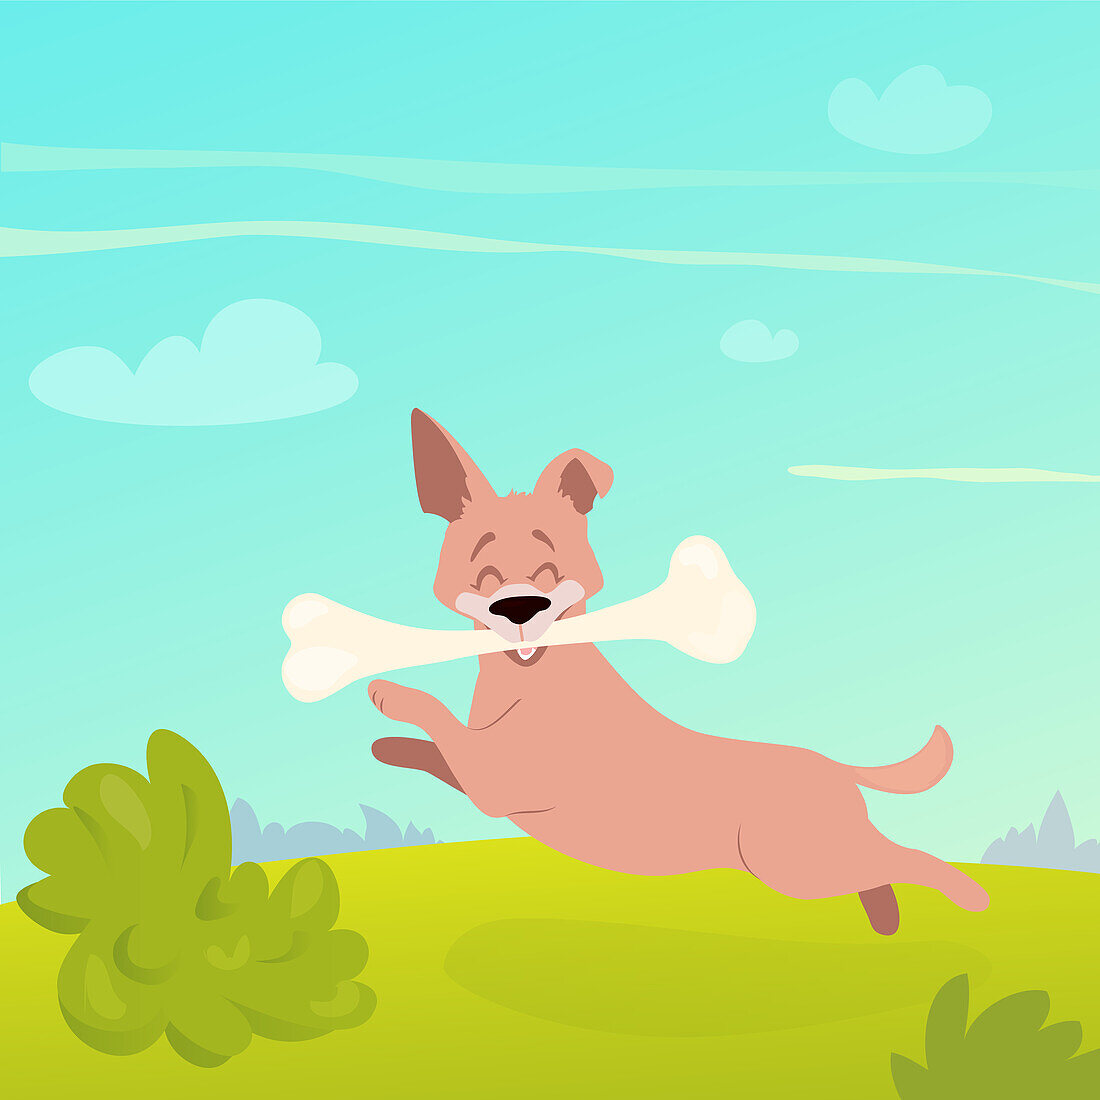 Happy jumping dog, illustration